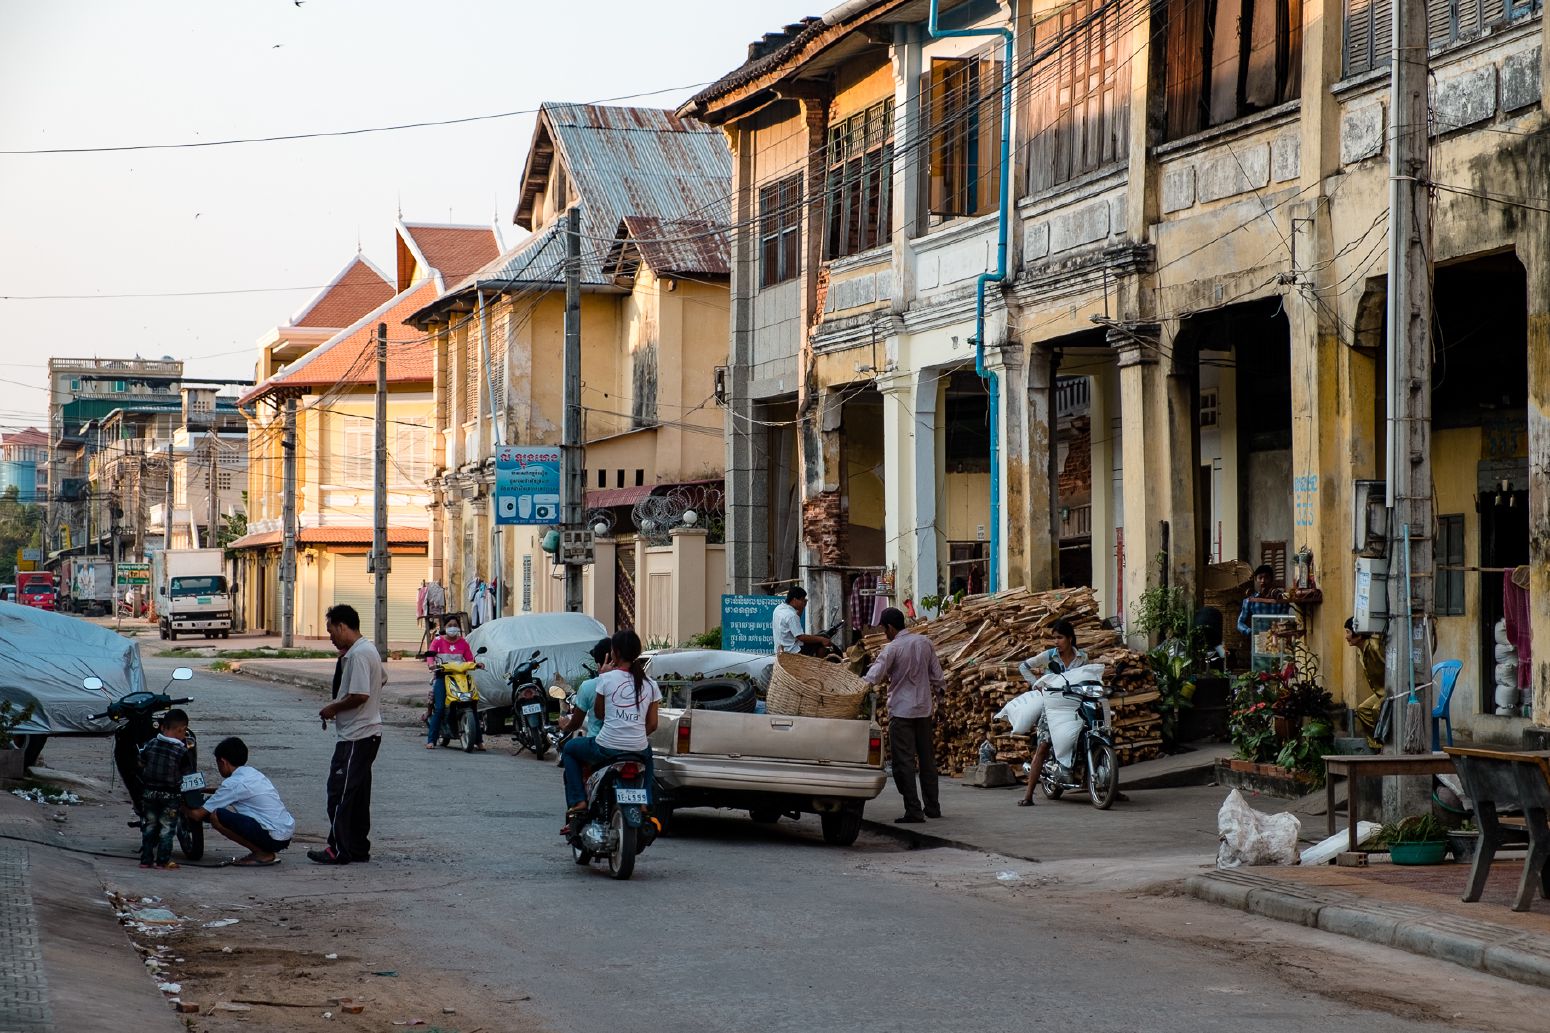 Kampot. Kampot, Cambodia. March 2014